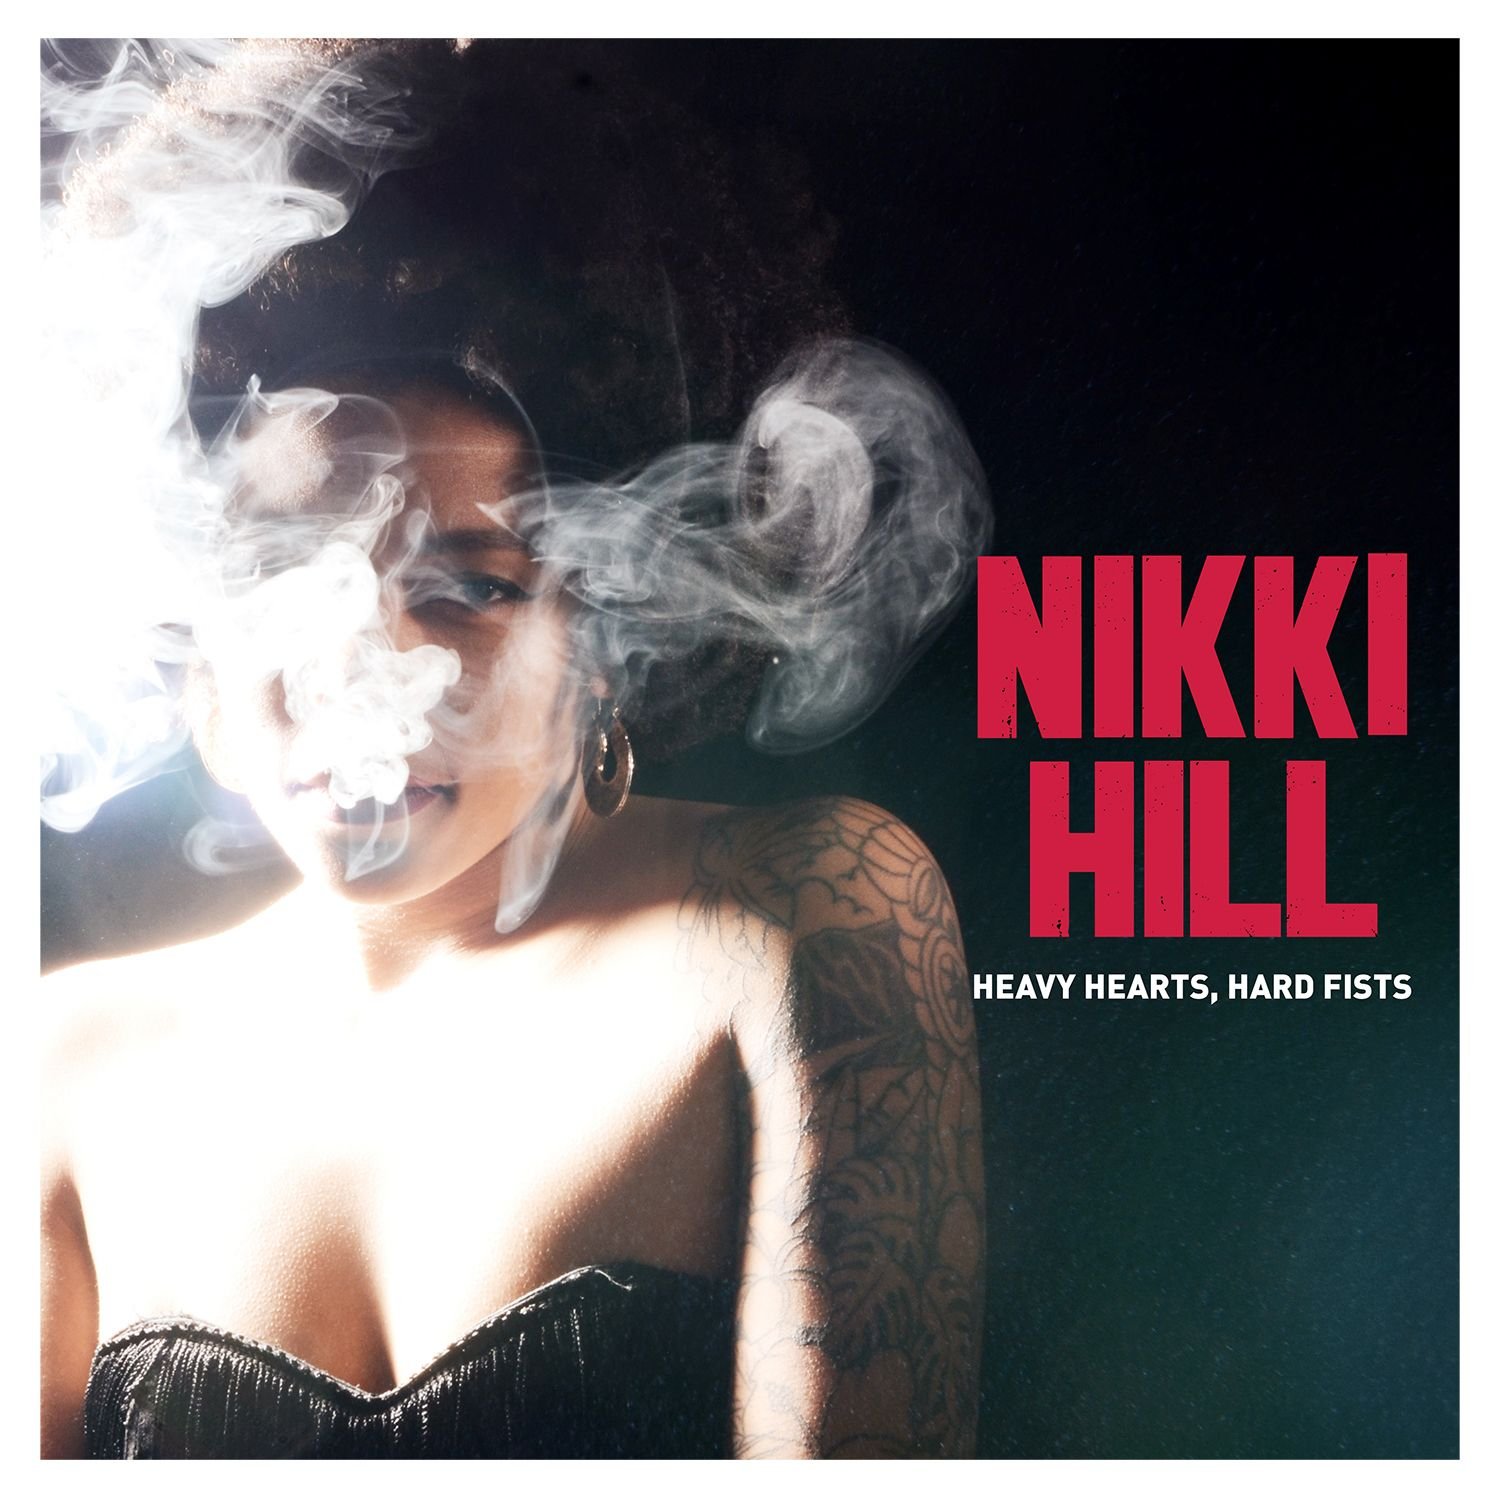 Nikki Hill "Heavy Hearts, Hard Fists" LP